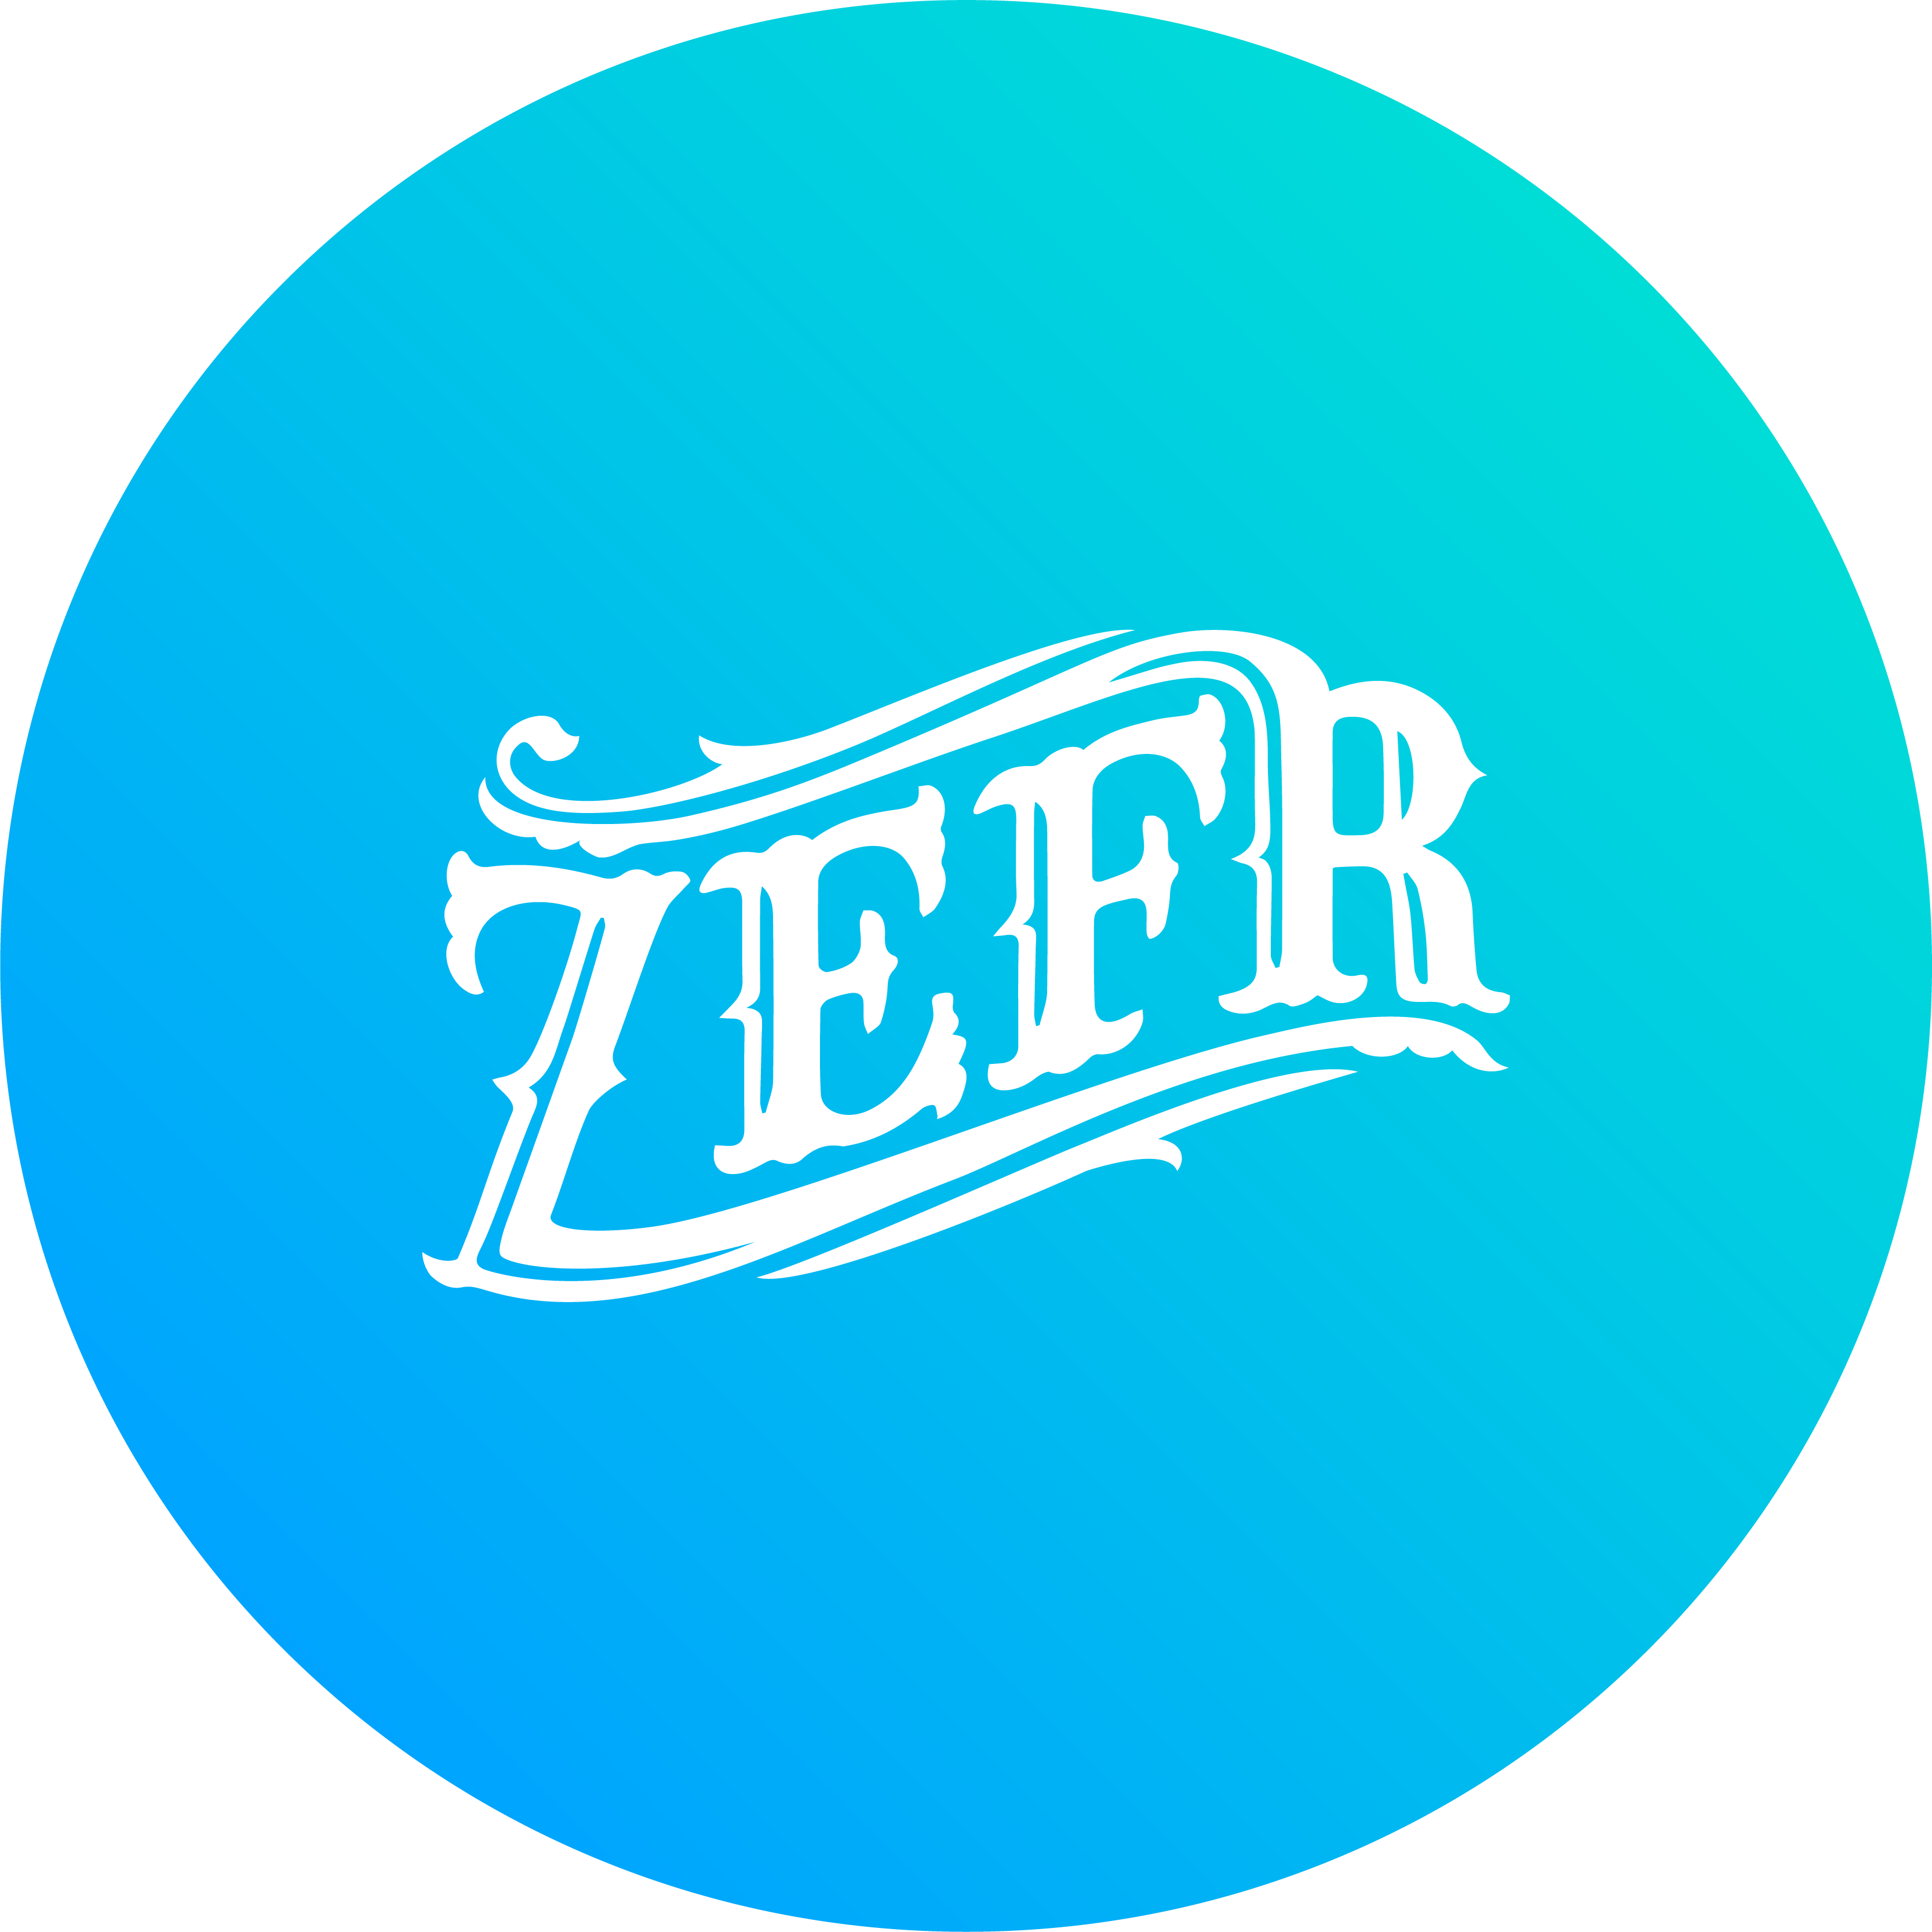 Zefr